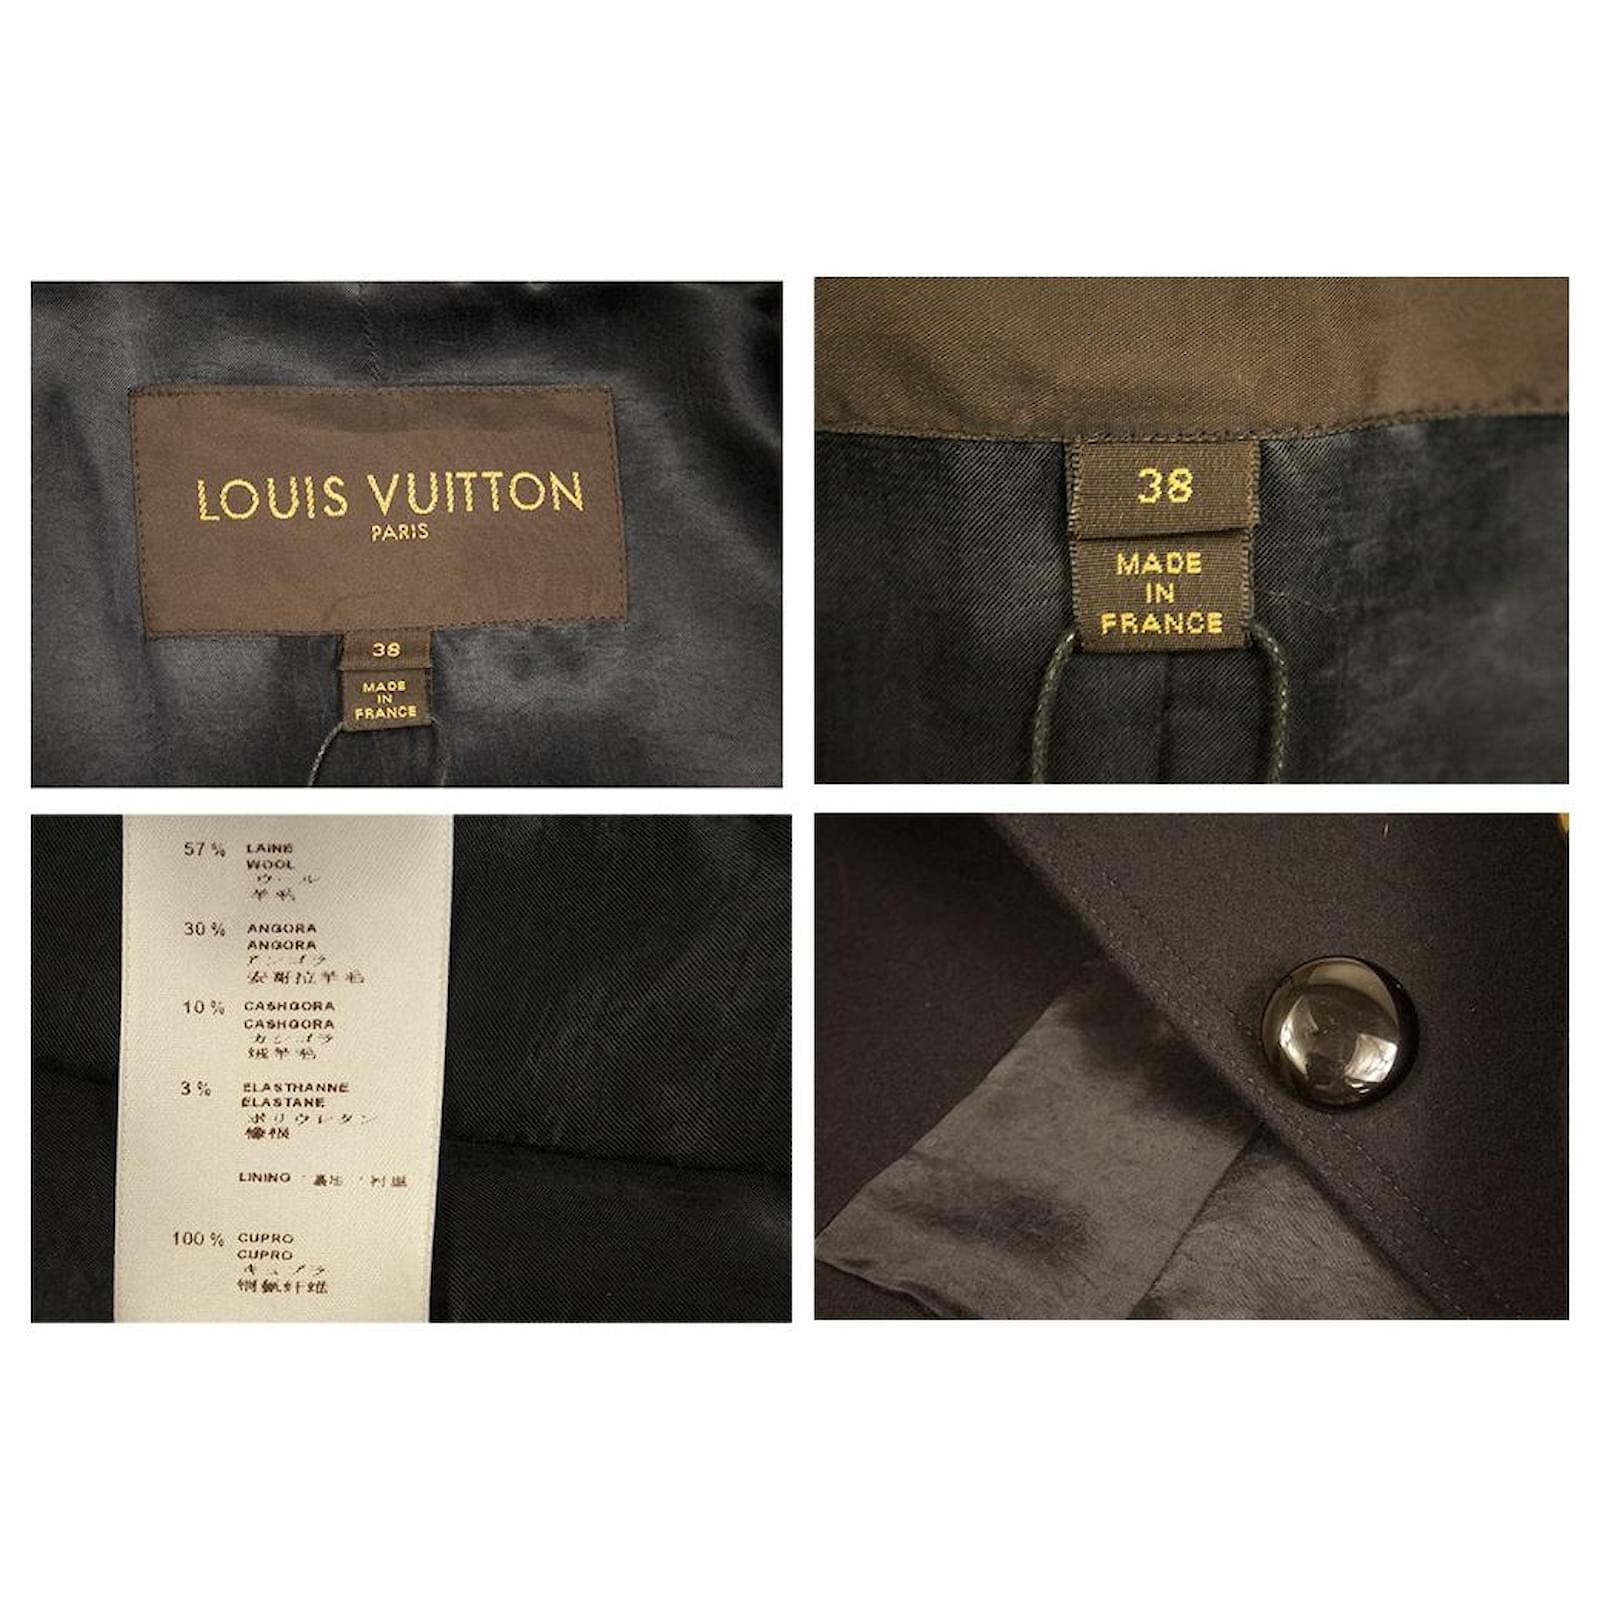 Louis Vuitton dark blue wool angora blend classic coat with gold